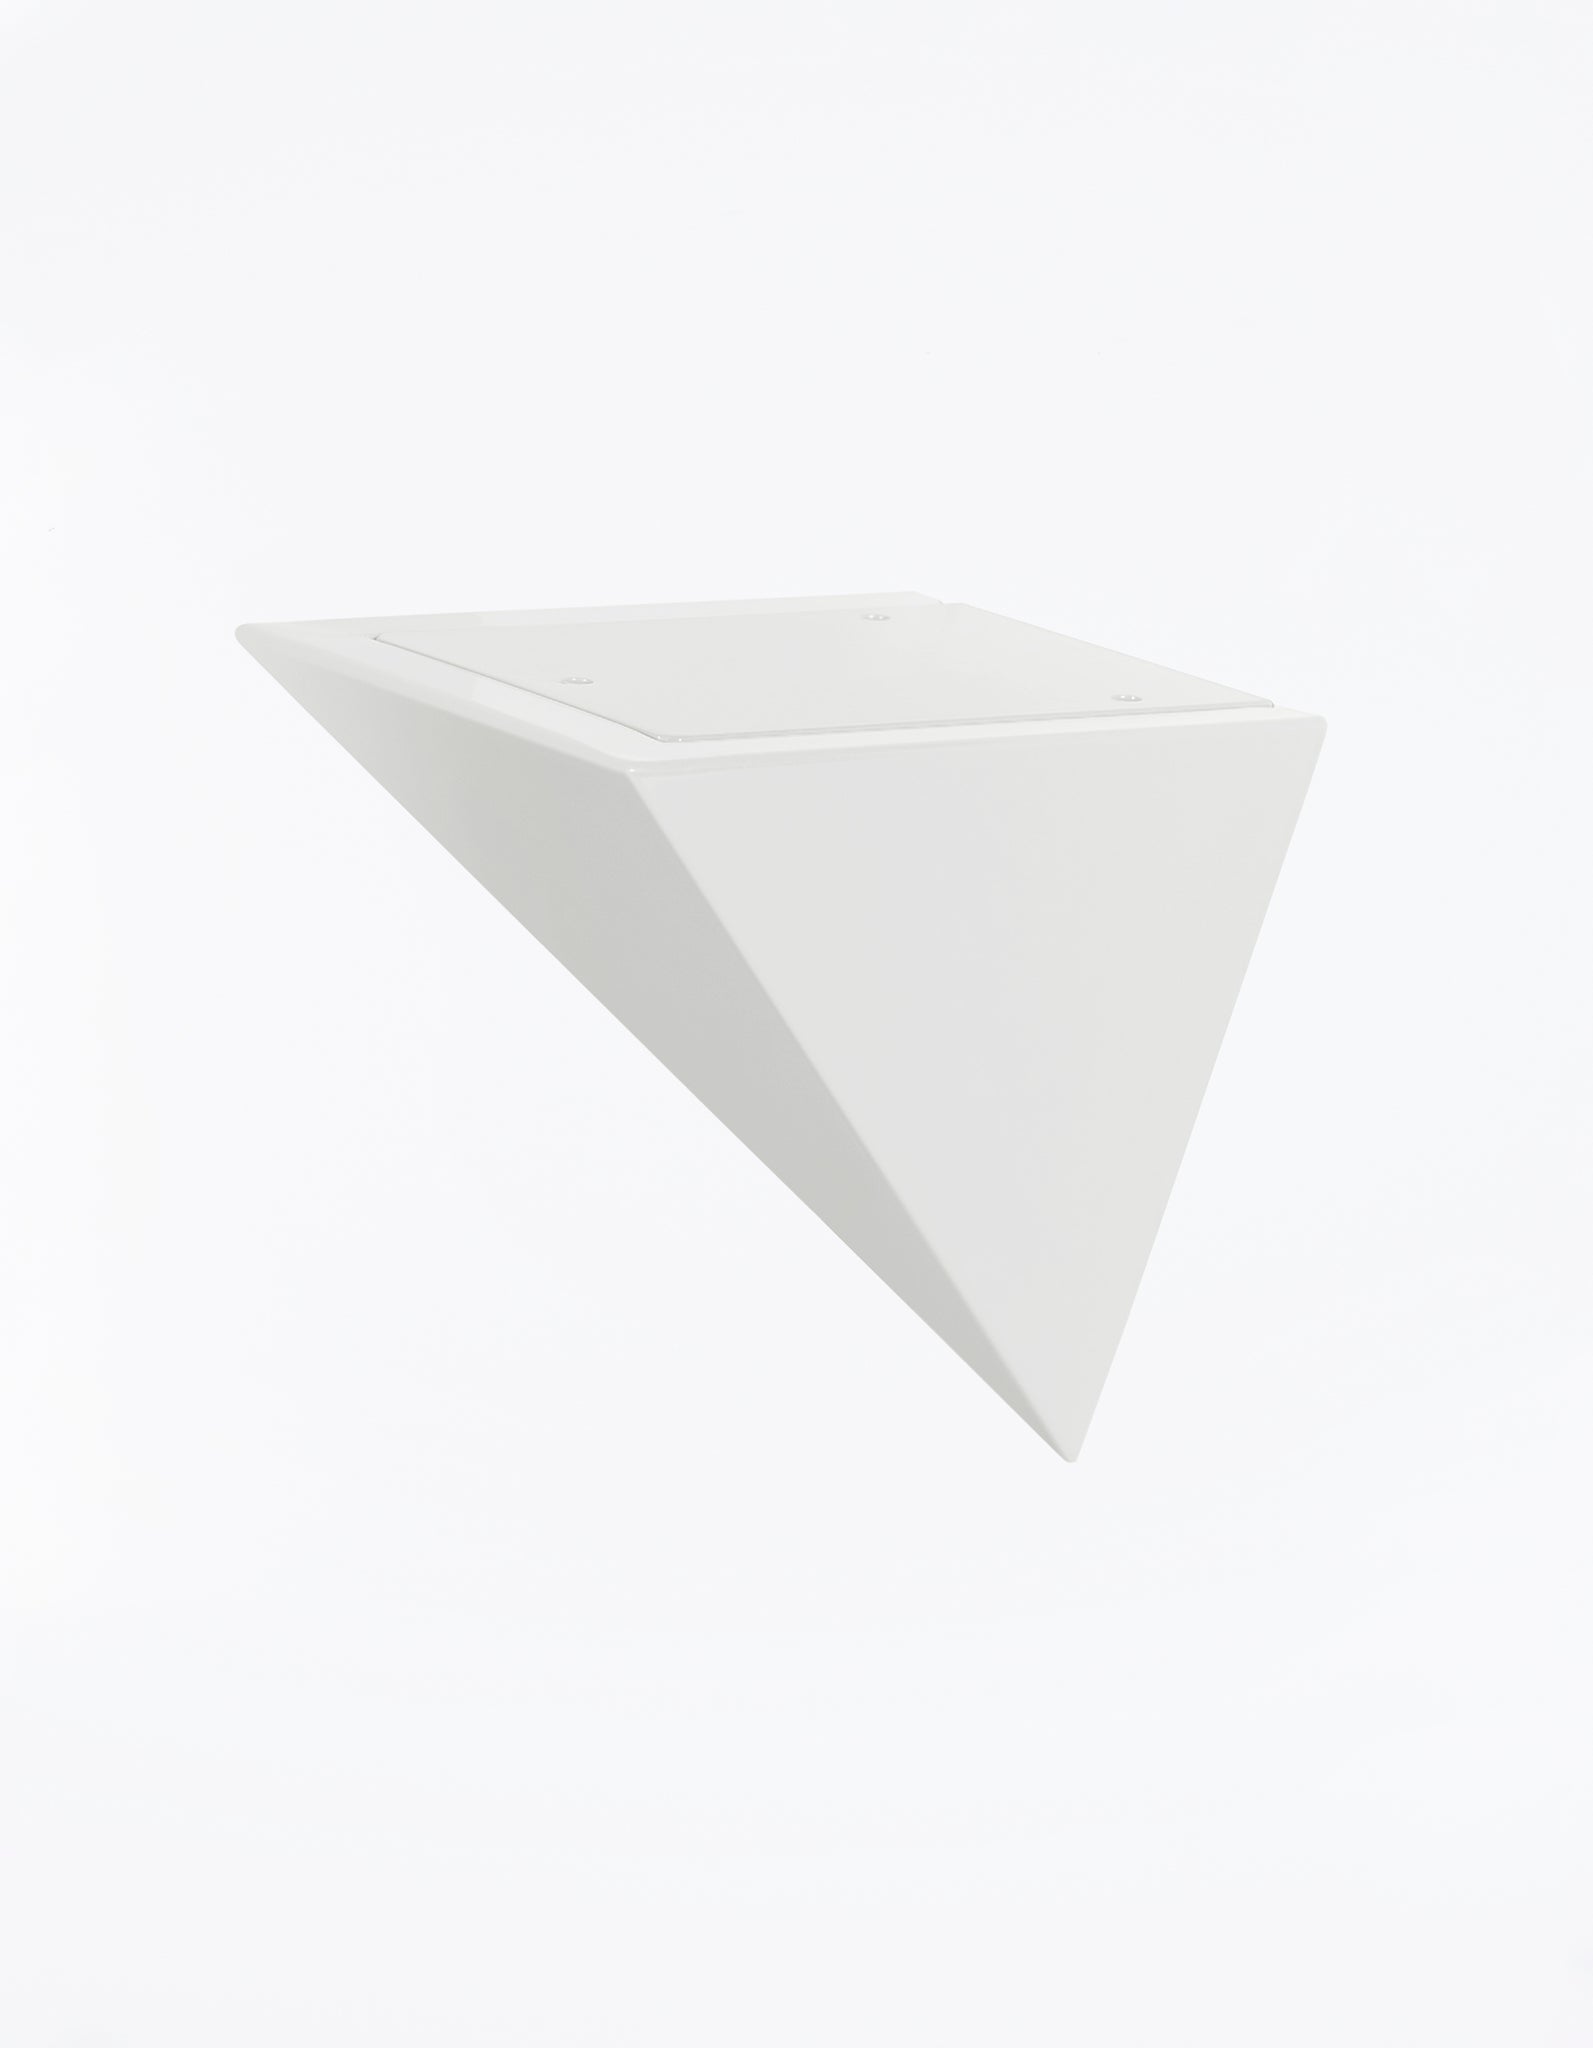 Pyramid Bracket in White